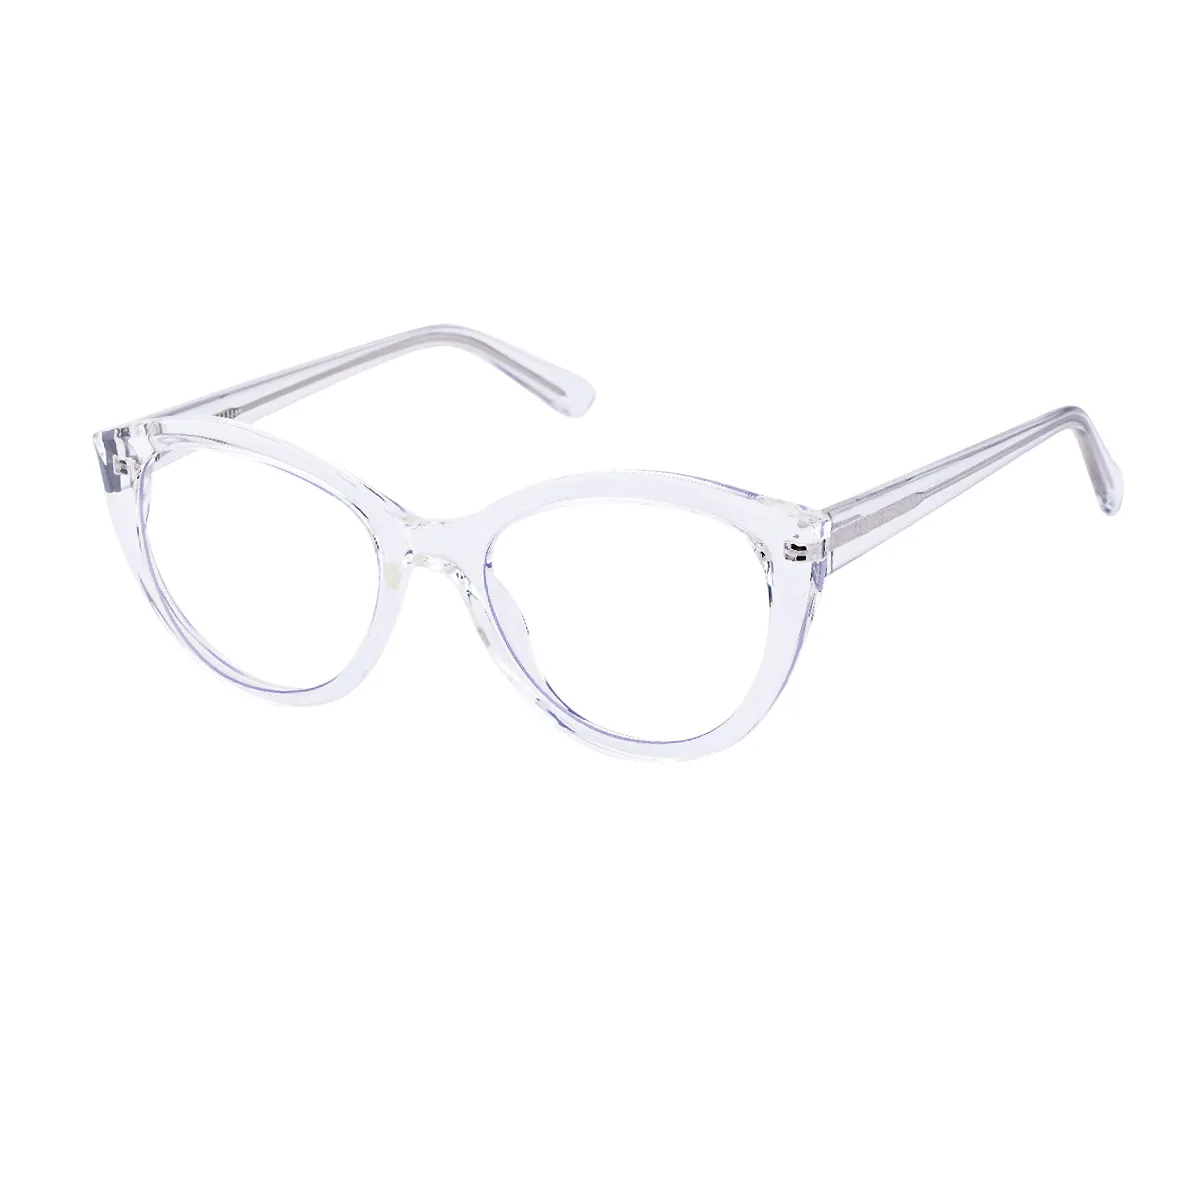 Griselda - Cat-eye Translucent Glasses for Women